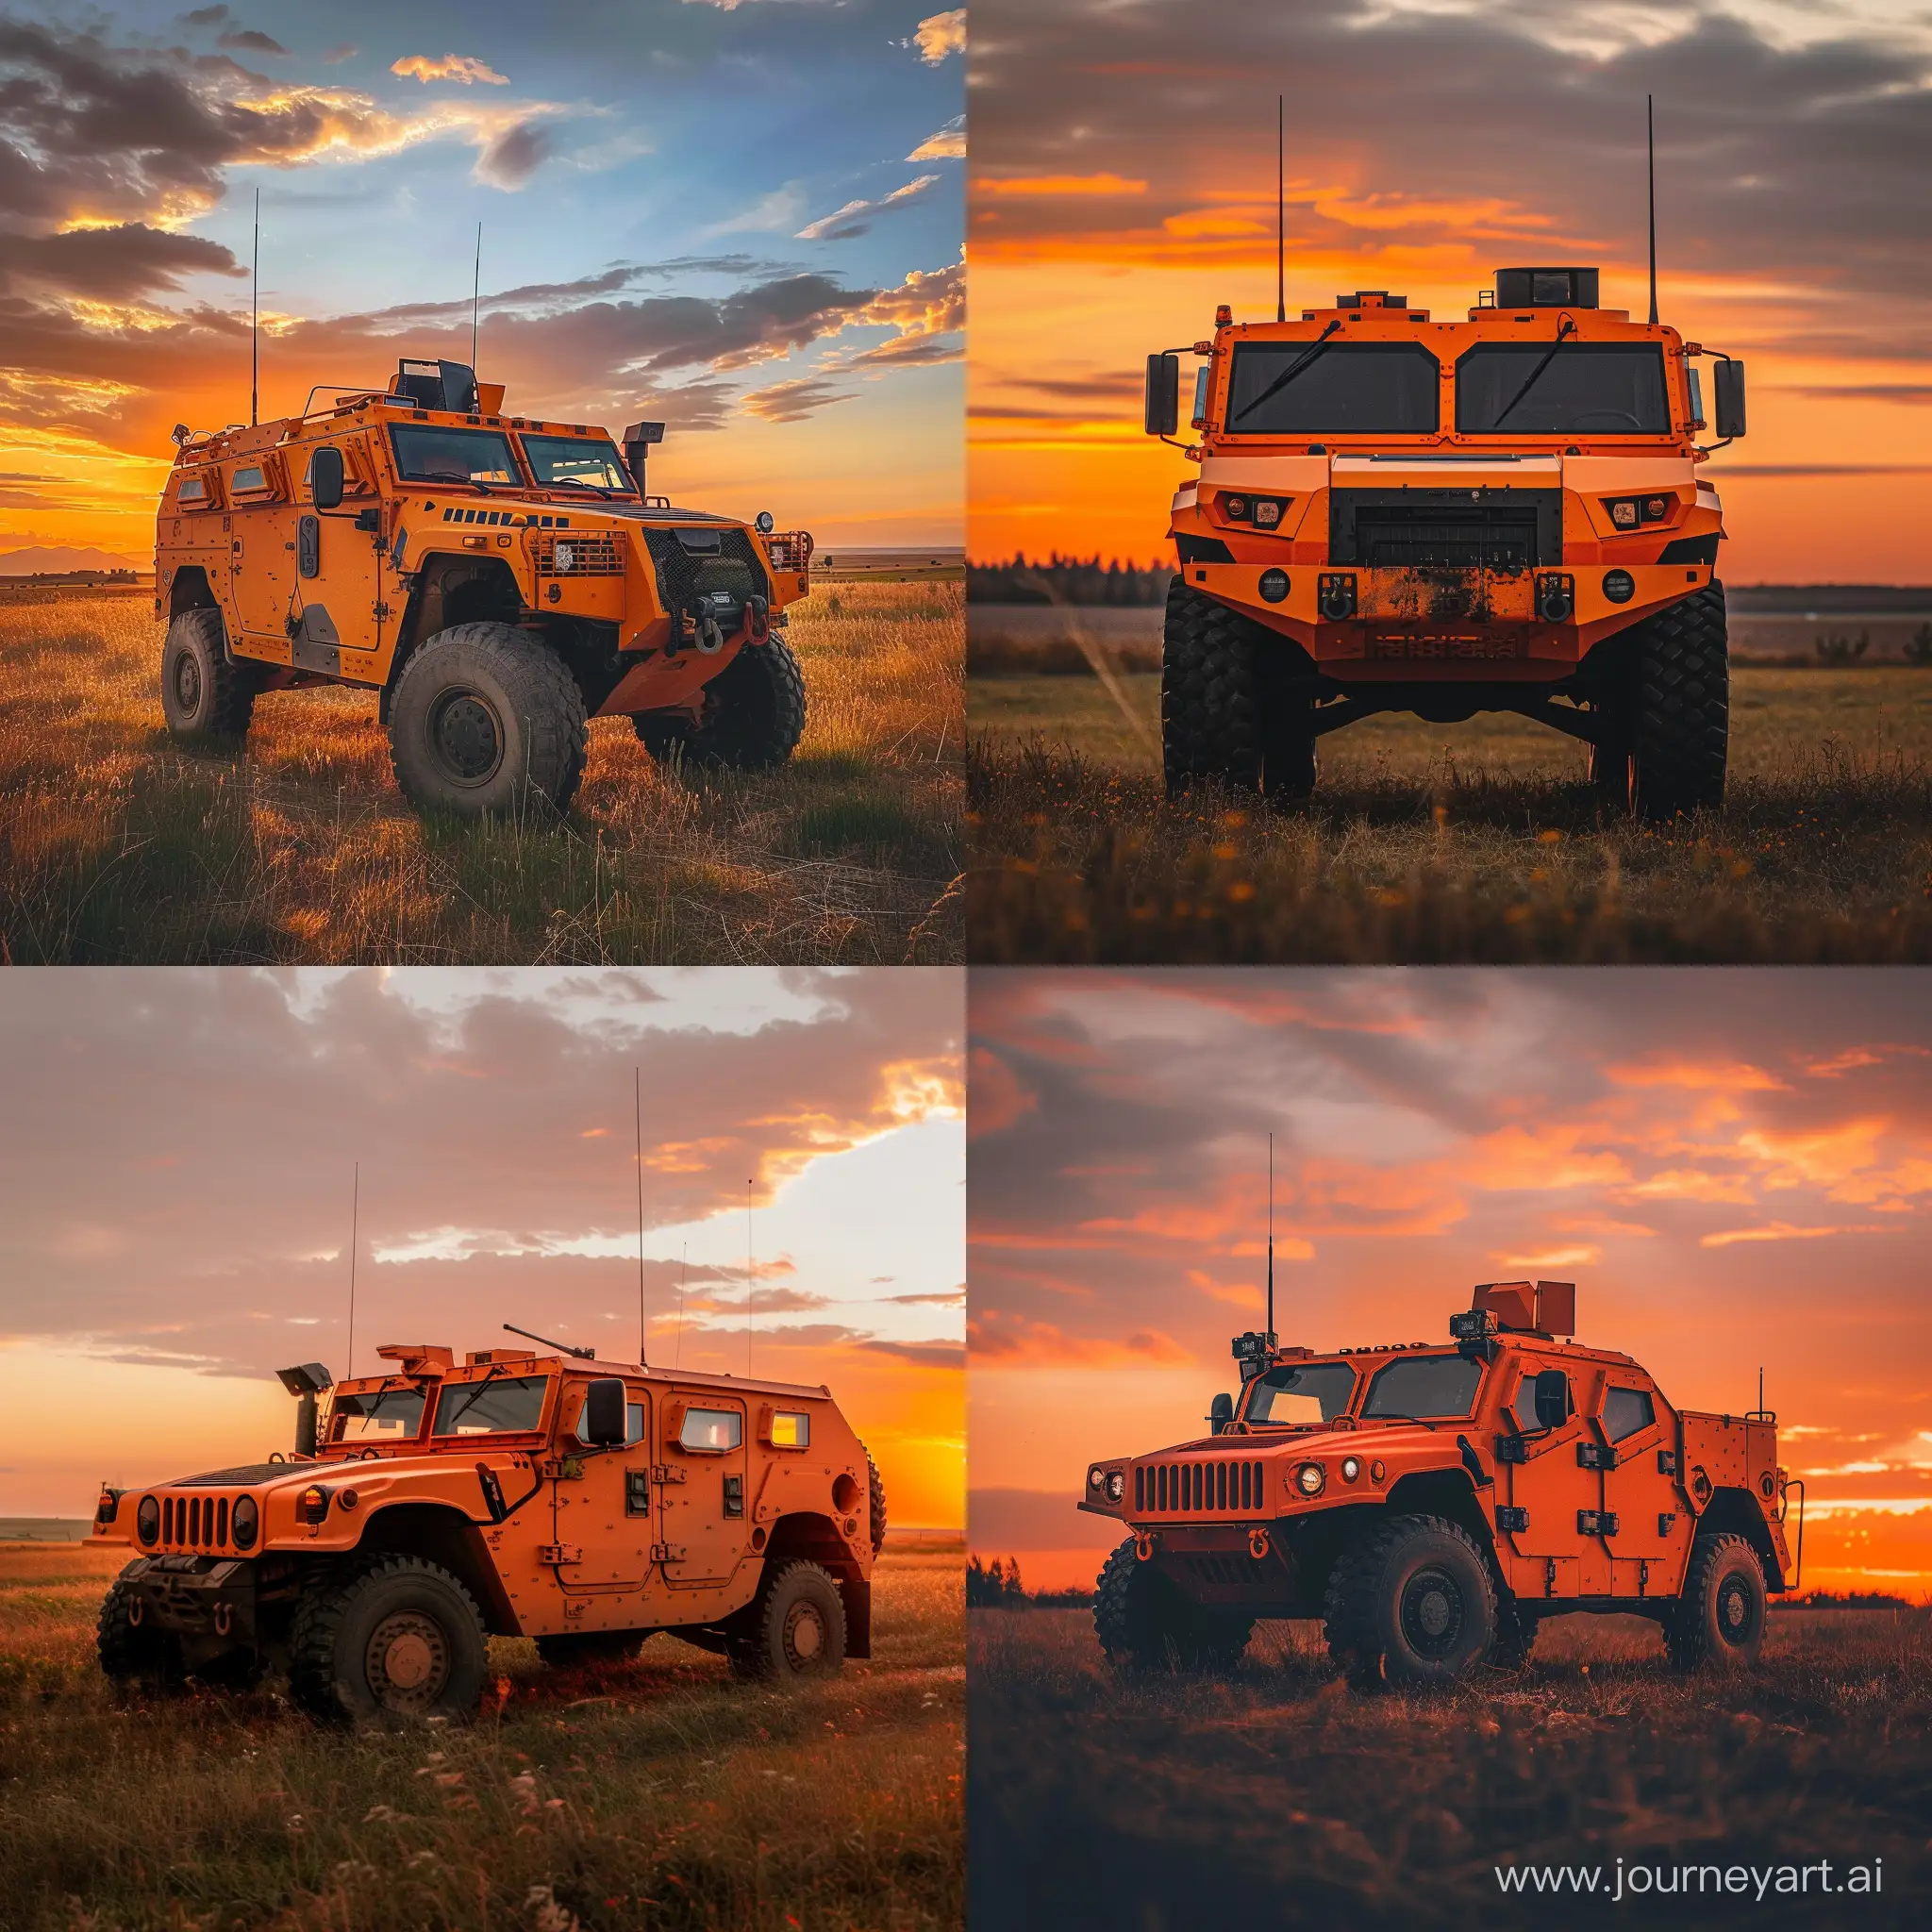 Orange-Infantry-Fighting-Vehicle-2-in-Sunset-Field